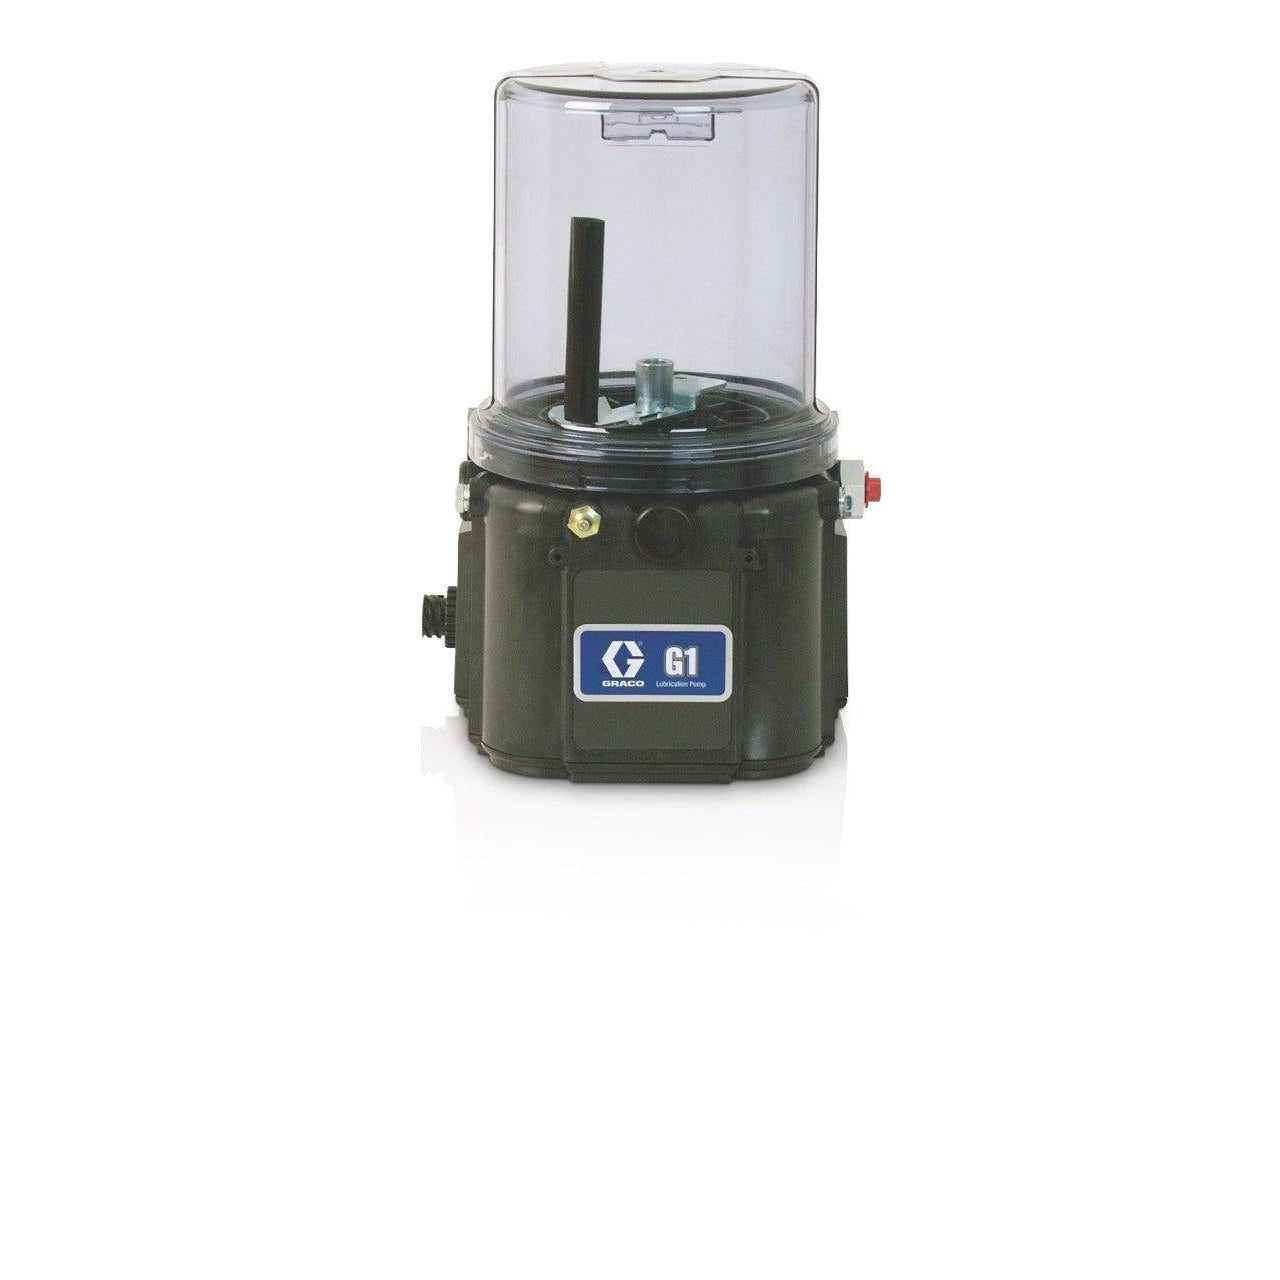 G1™ Standard Oil Lubrication Pump, 90-240 VAC, 4 Liter, DIN, Low Level